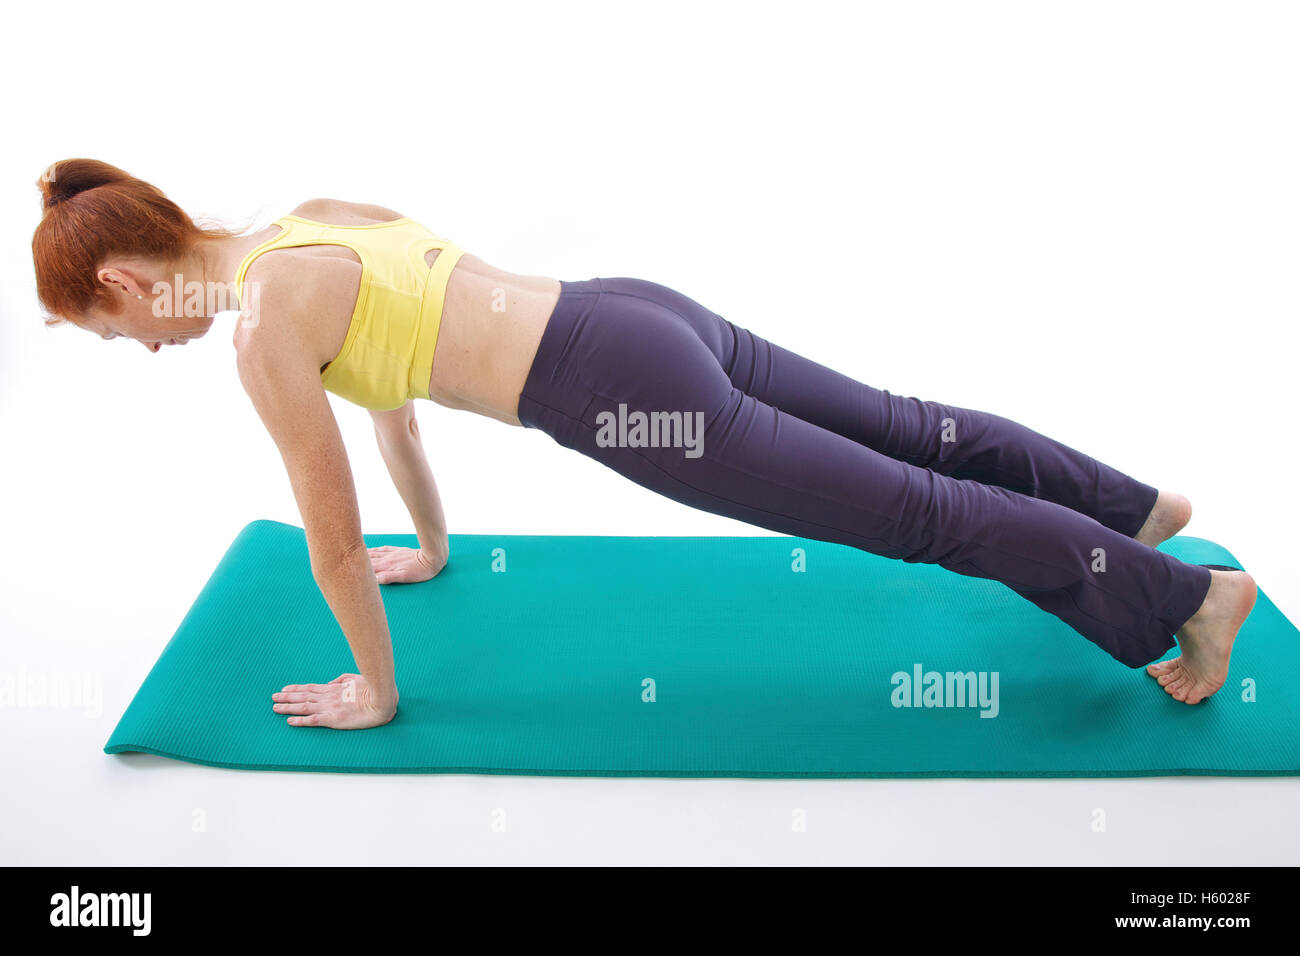 Woman exercising on a gymnastics mat Stock Photo